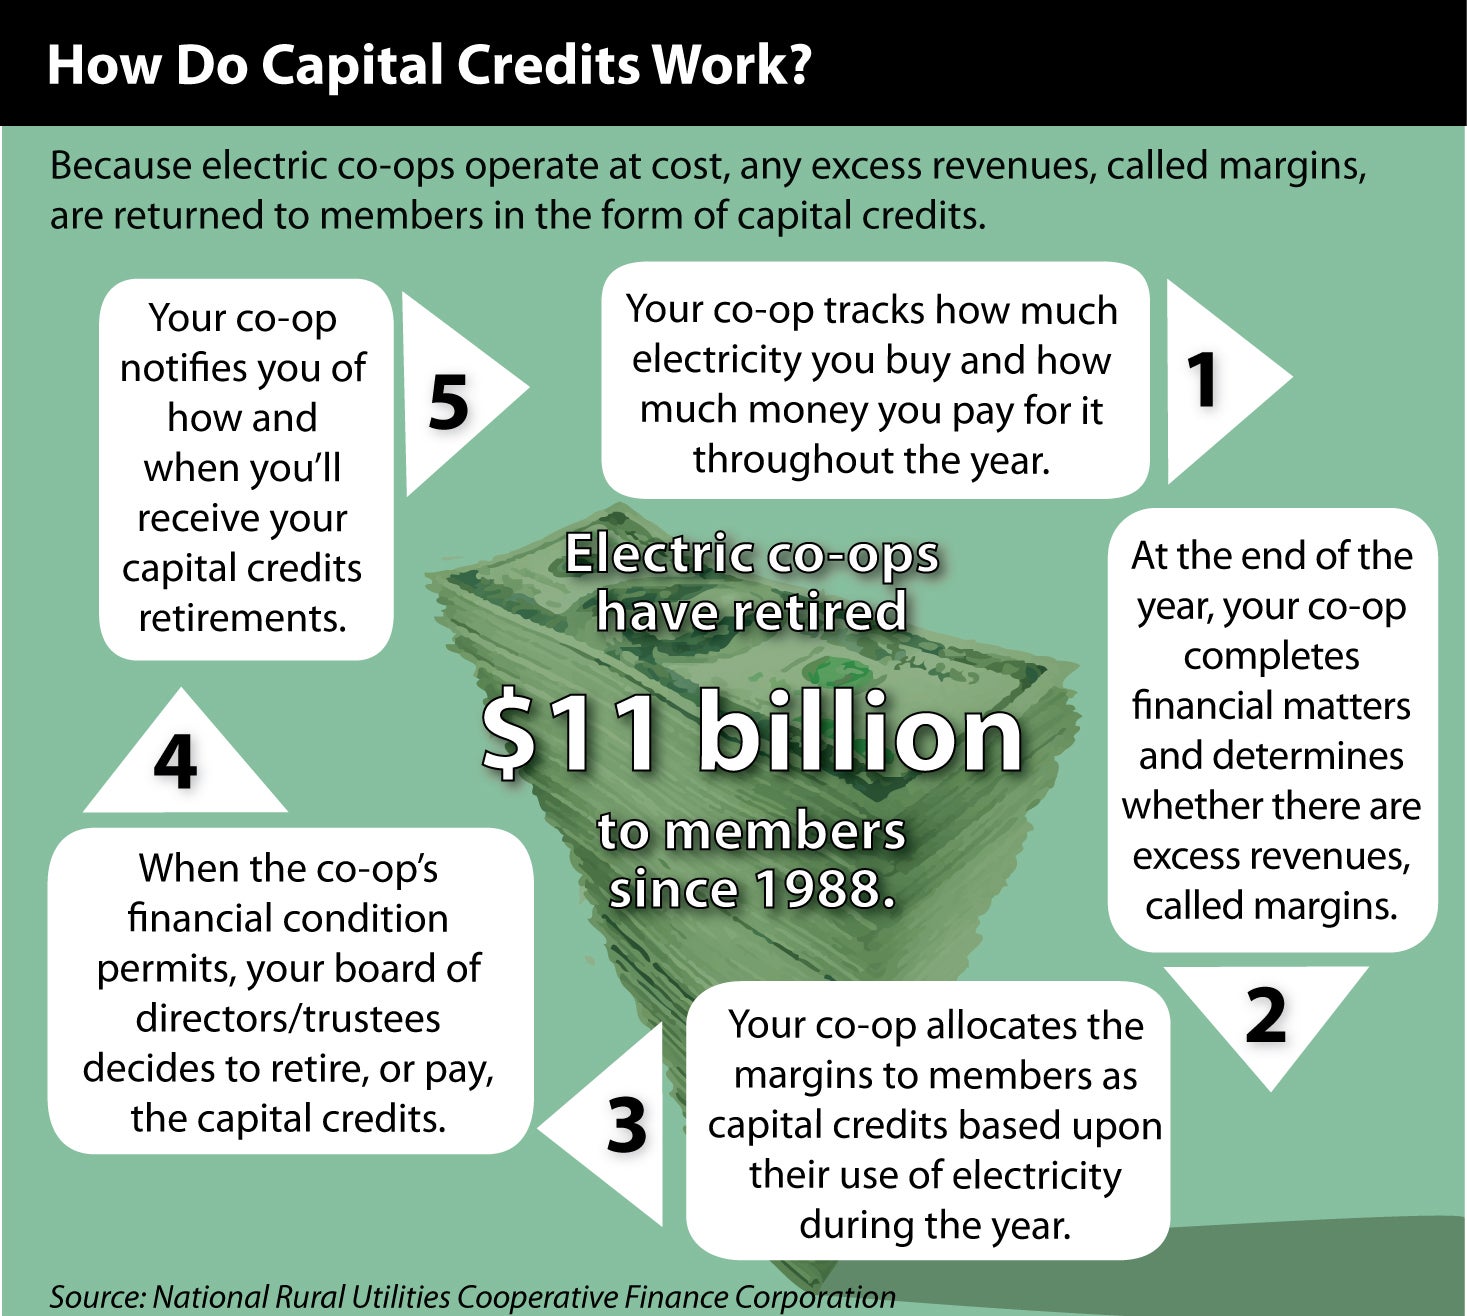 201310_GRAPHIC_Howdo capital credits workUPDATE.jpg